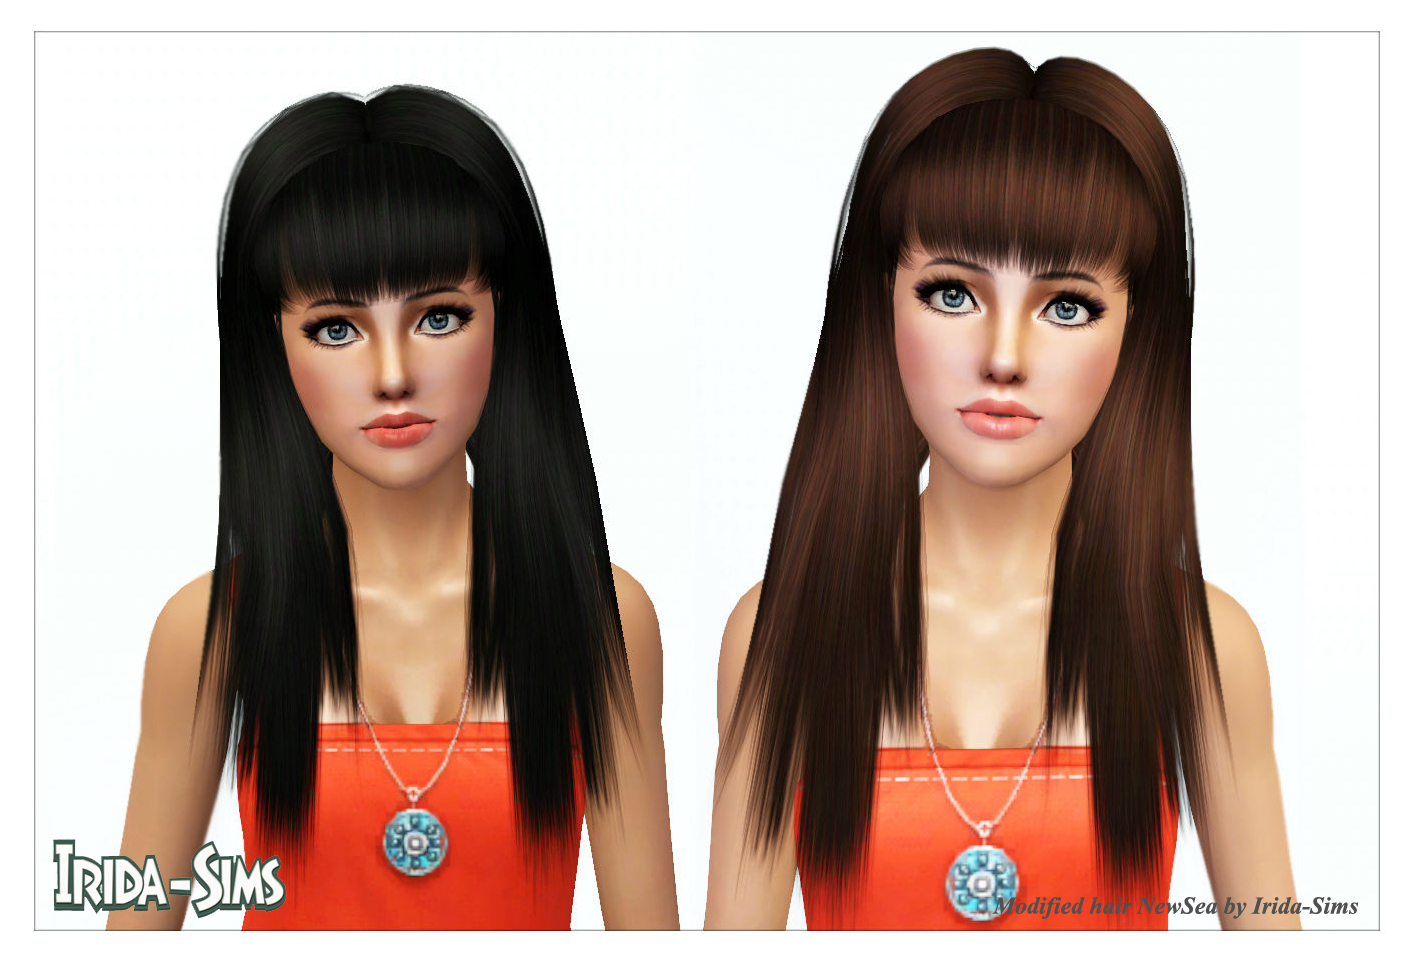 Sims3 hair with Band. 0.3 Волосы. Тока бока волосы прическа. Bangs of Lady Hairstyle Maneken.